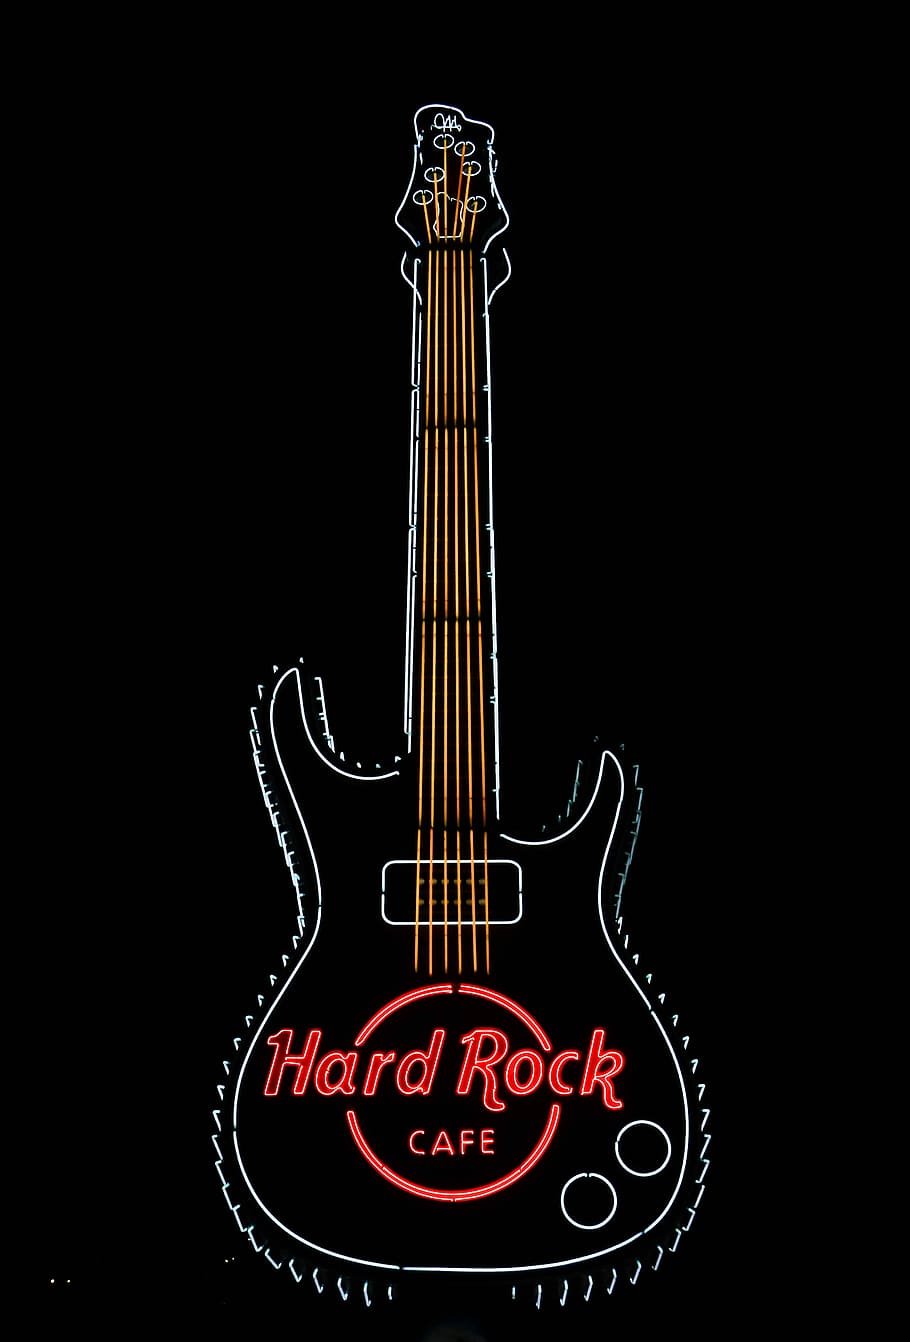 Hard Rock Cafe 1080p 2k 4k 5k Hd Wallpapers Free Download Wallpaper Flare